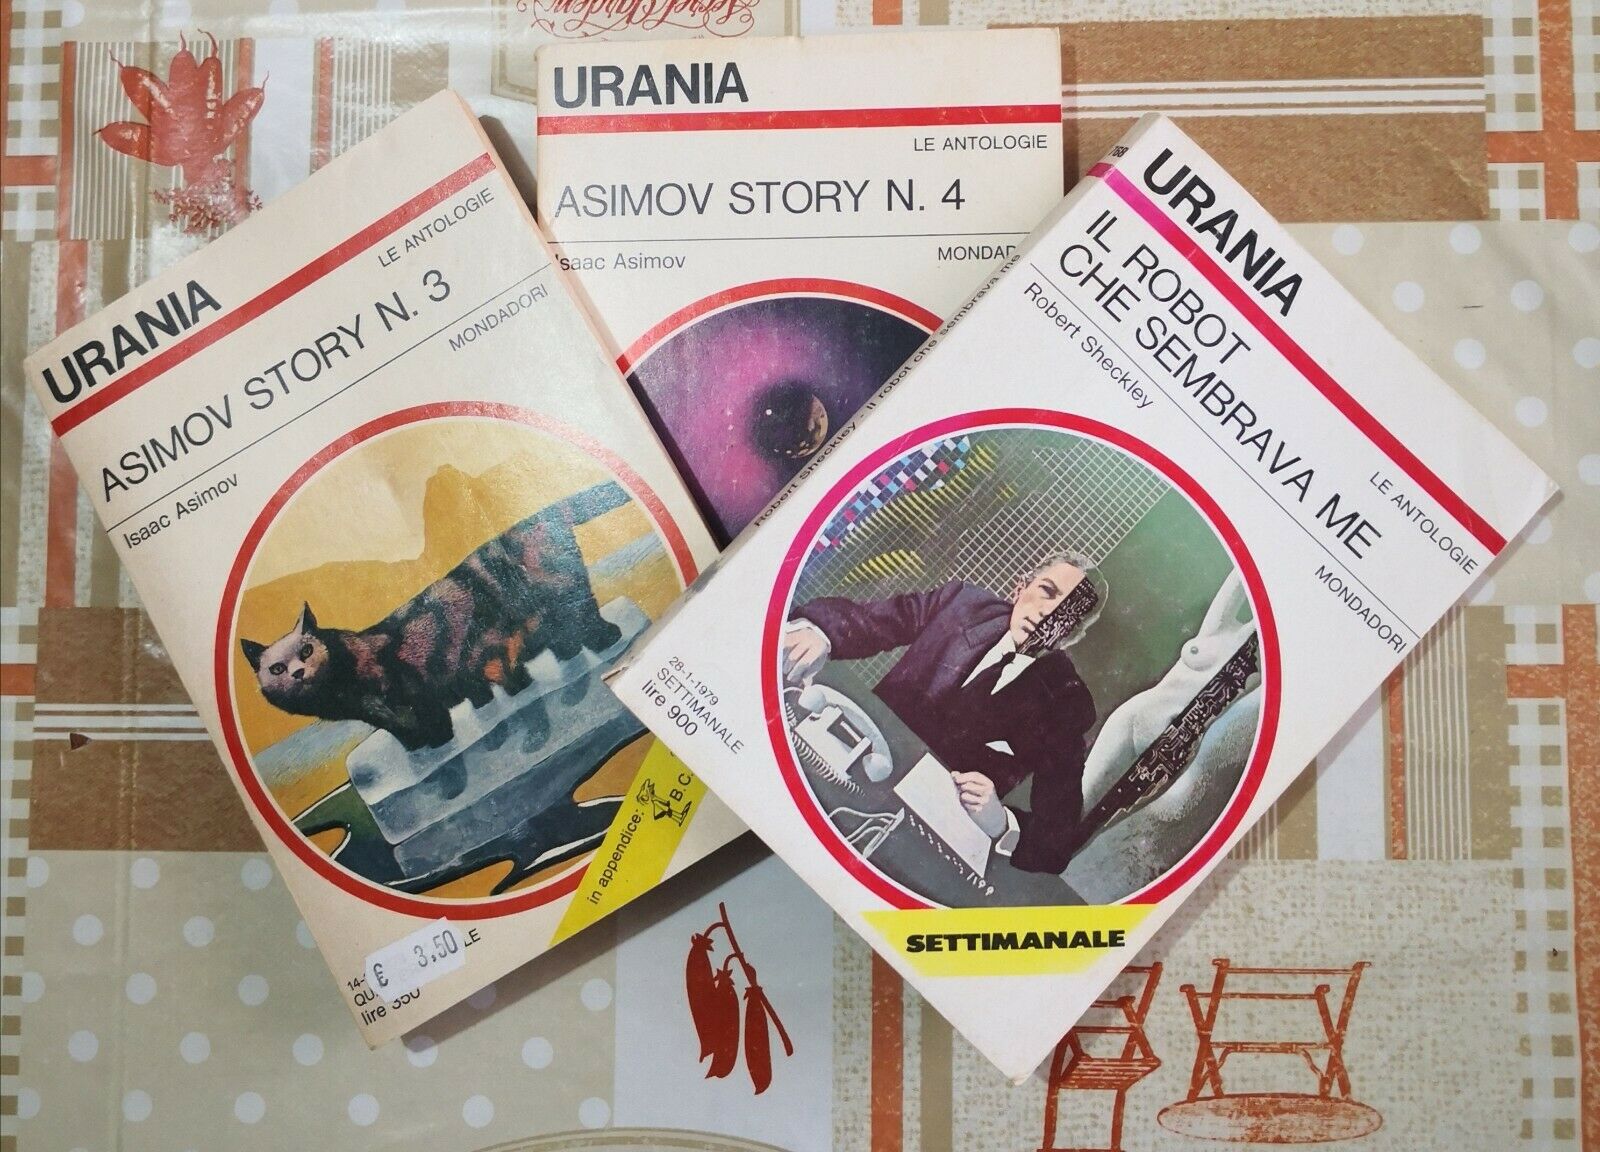  Urania- Le antologia  di Isaac Asimov N 3 - 4 , Il robot... Sheckley   1973, -F